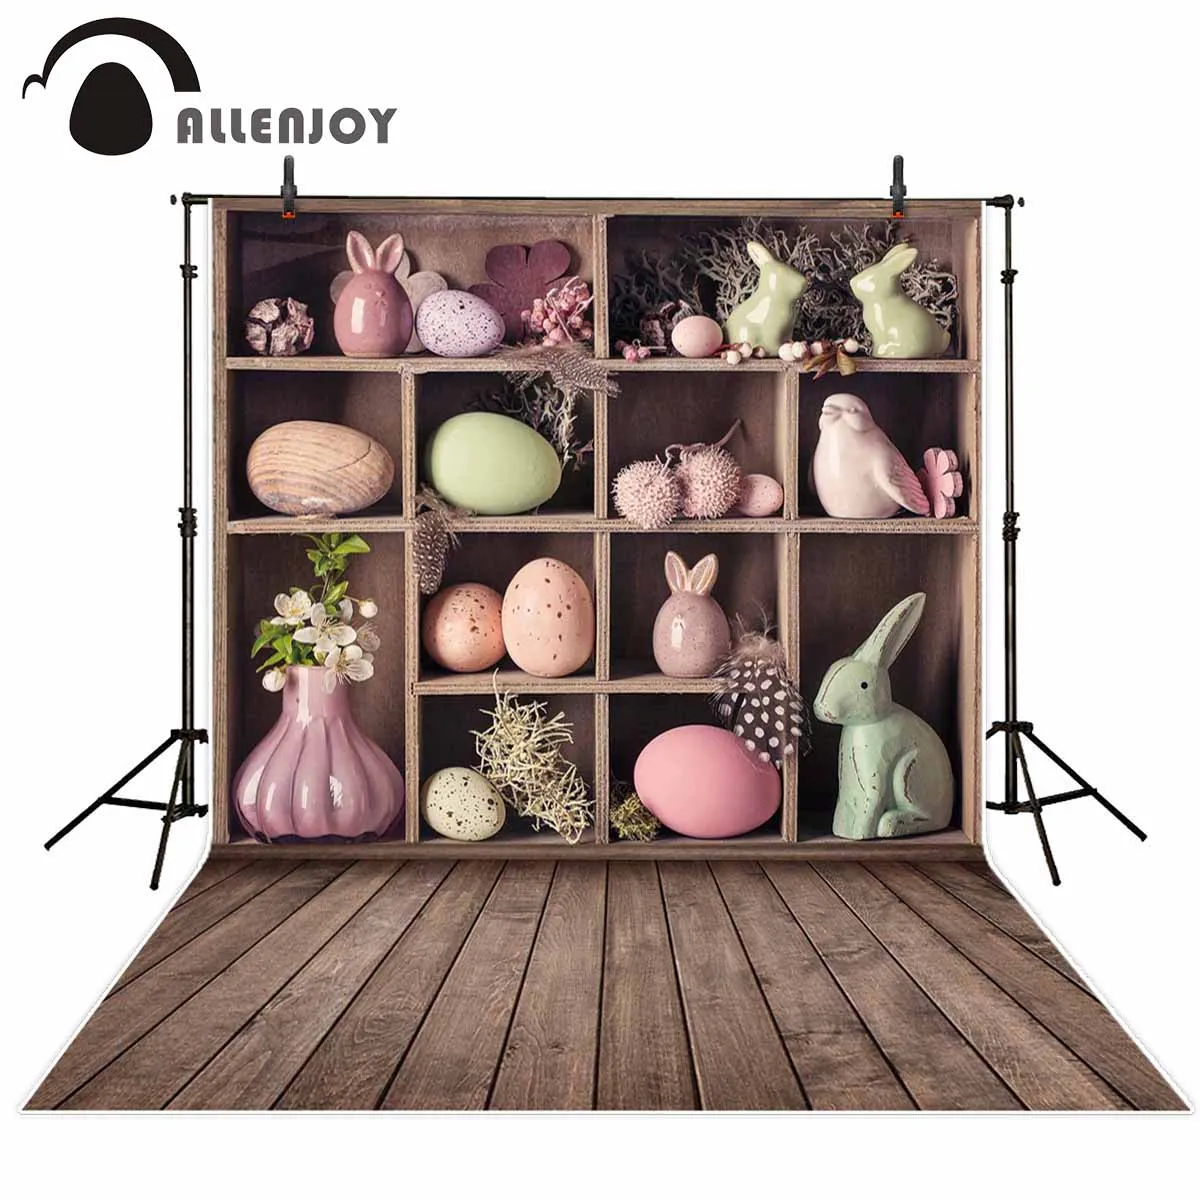 

Allenjoy photophone backgrounds Easter bunny egg flower vase wood floor shelf spring professional backdrops photocall banner